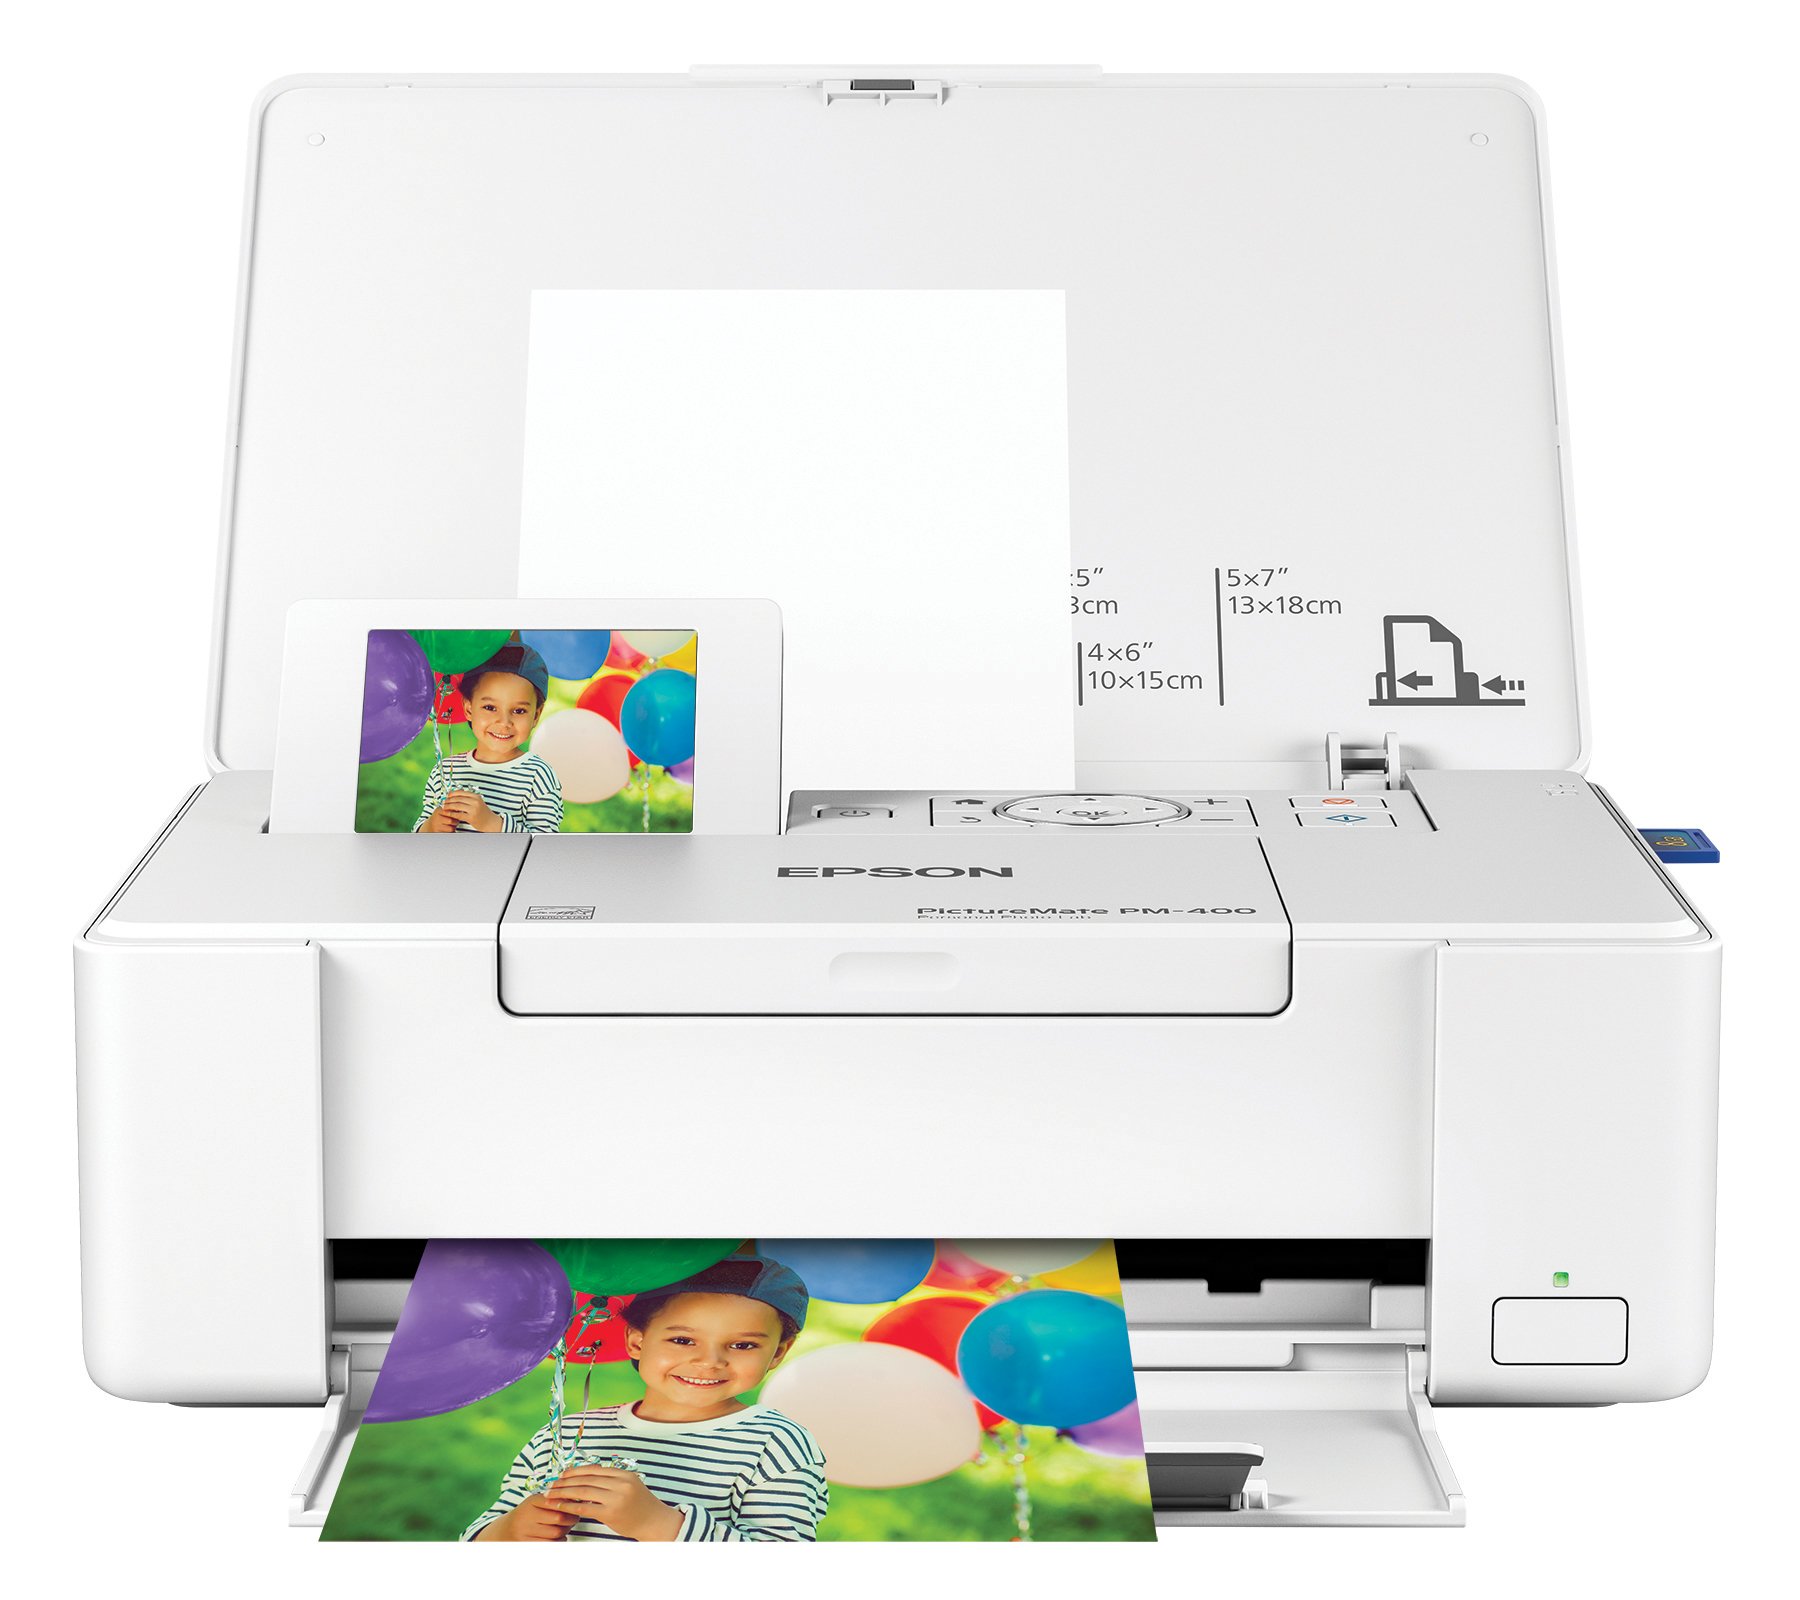 Epson Impresora fotográfica en color inalámbrica compacta PictureMate PM-400